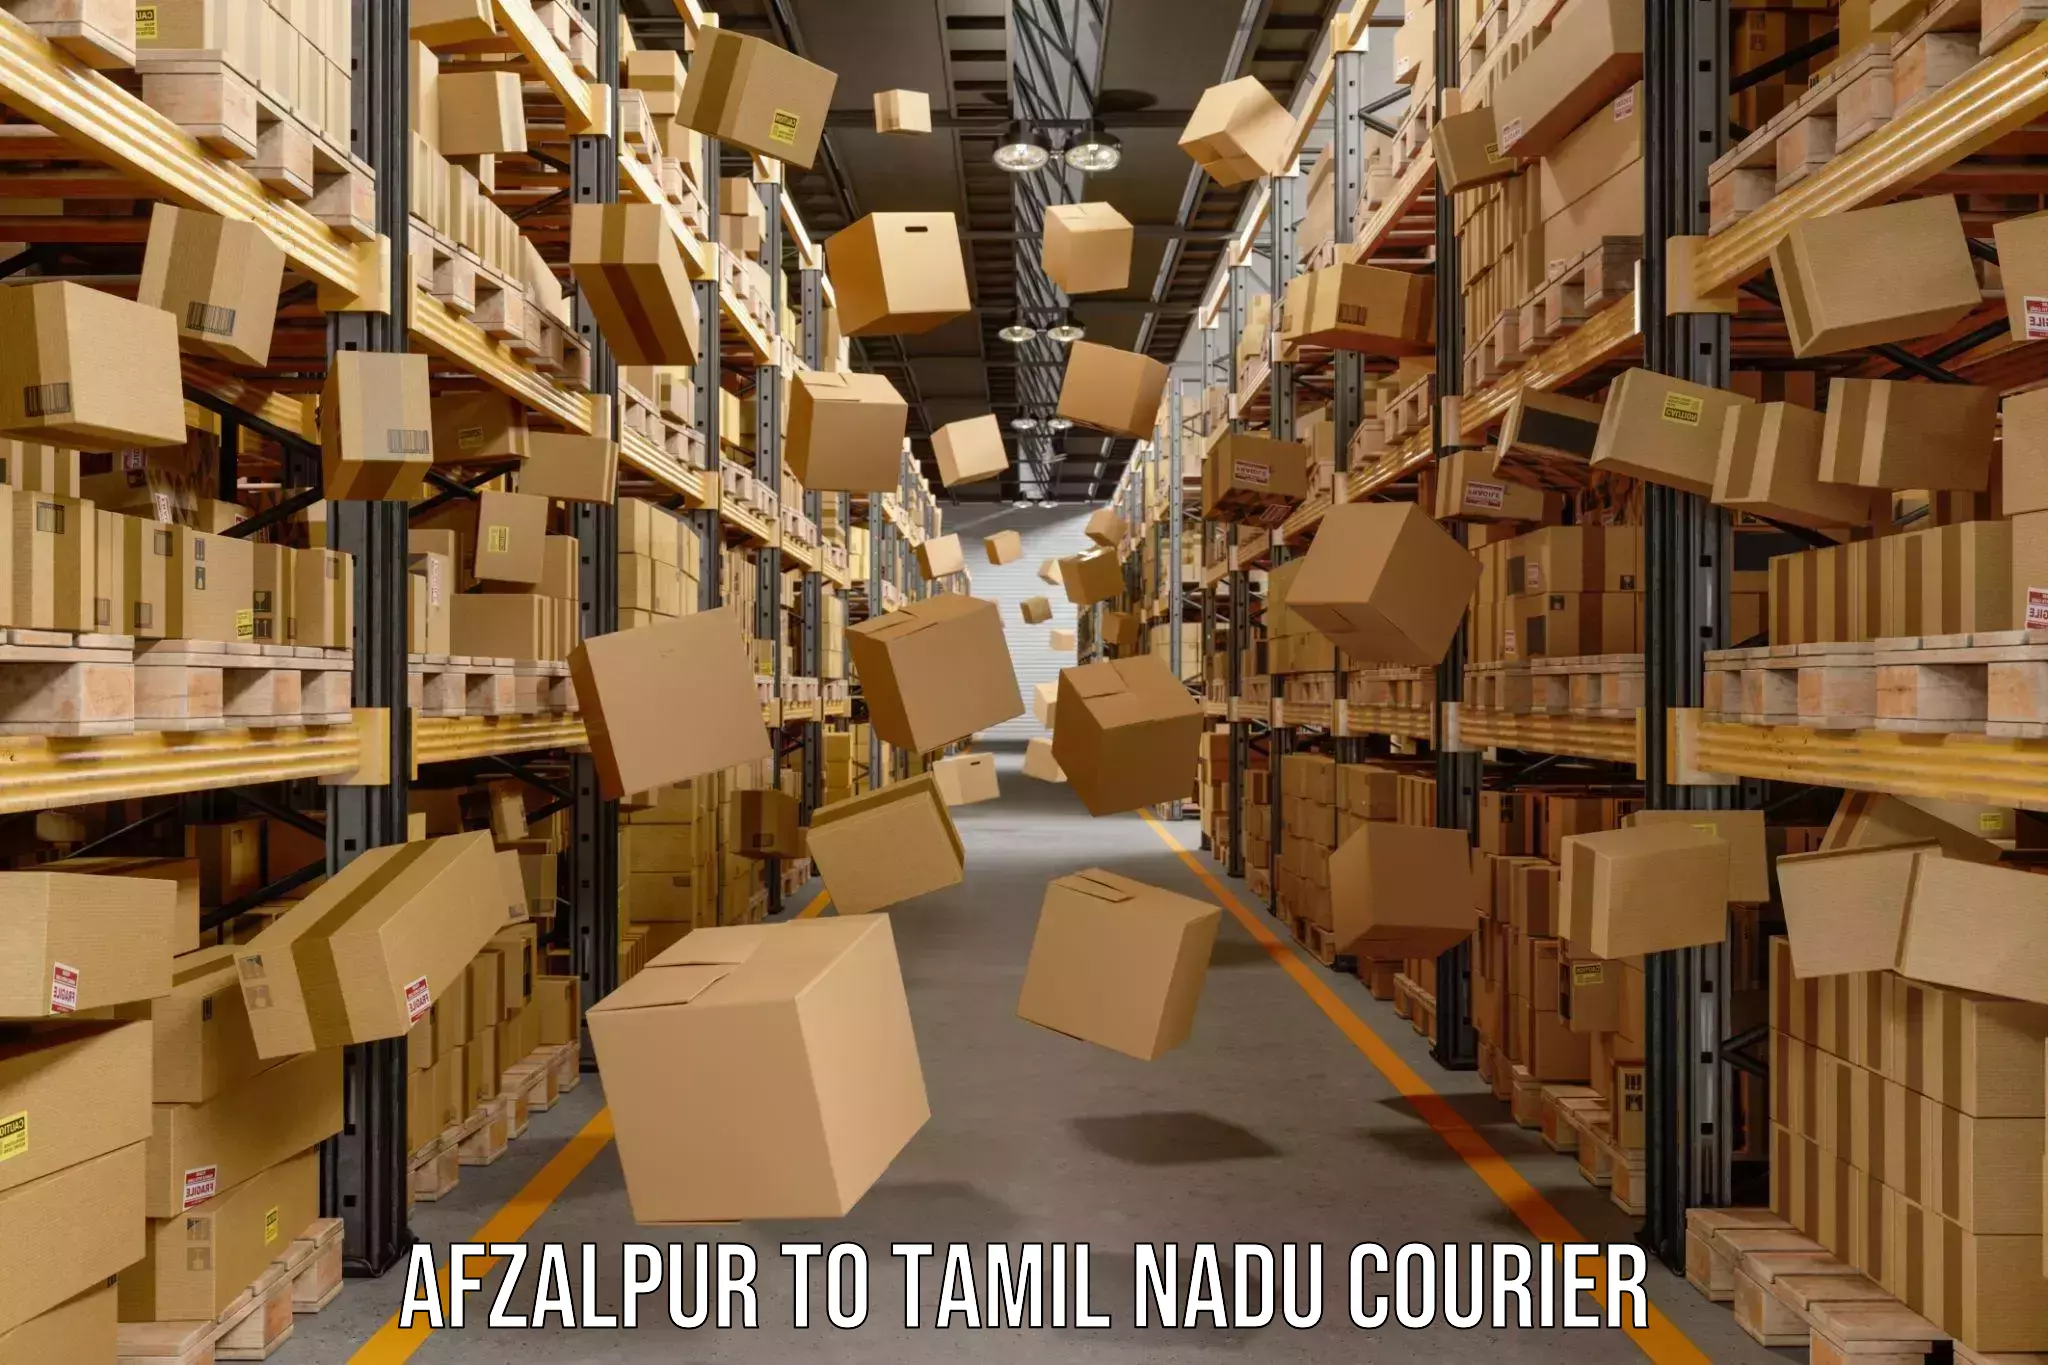 Courier service innovation Afzalpur to Tamil Nadu